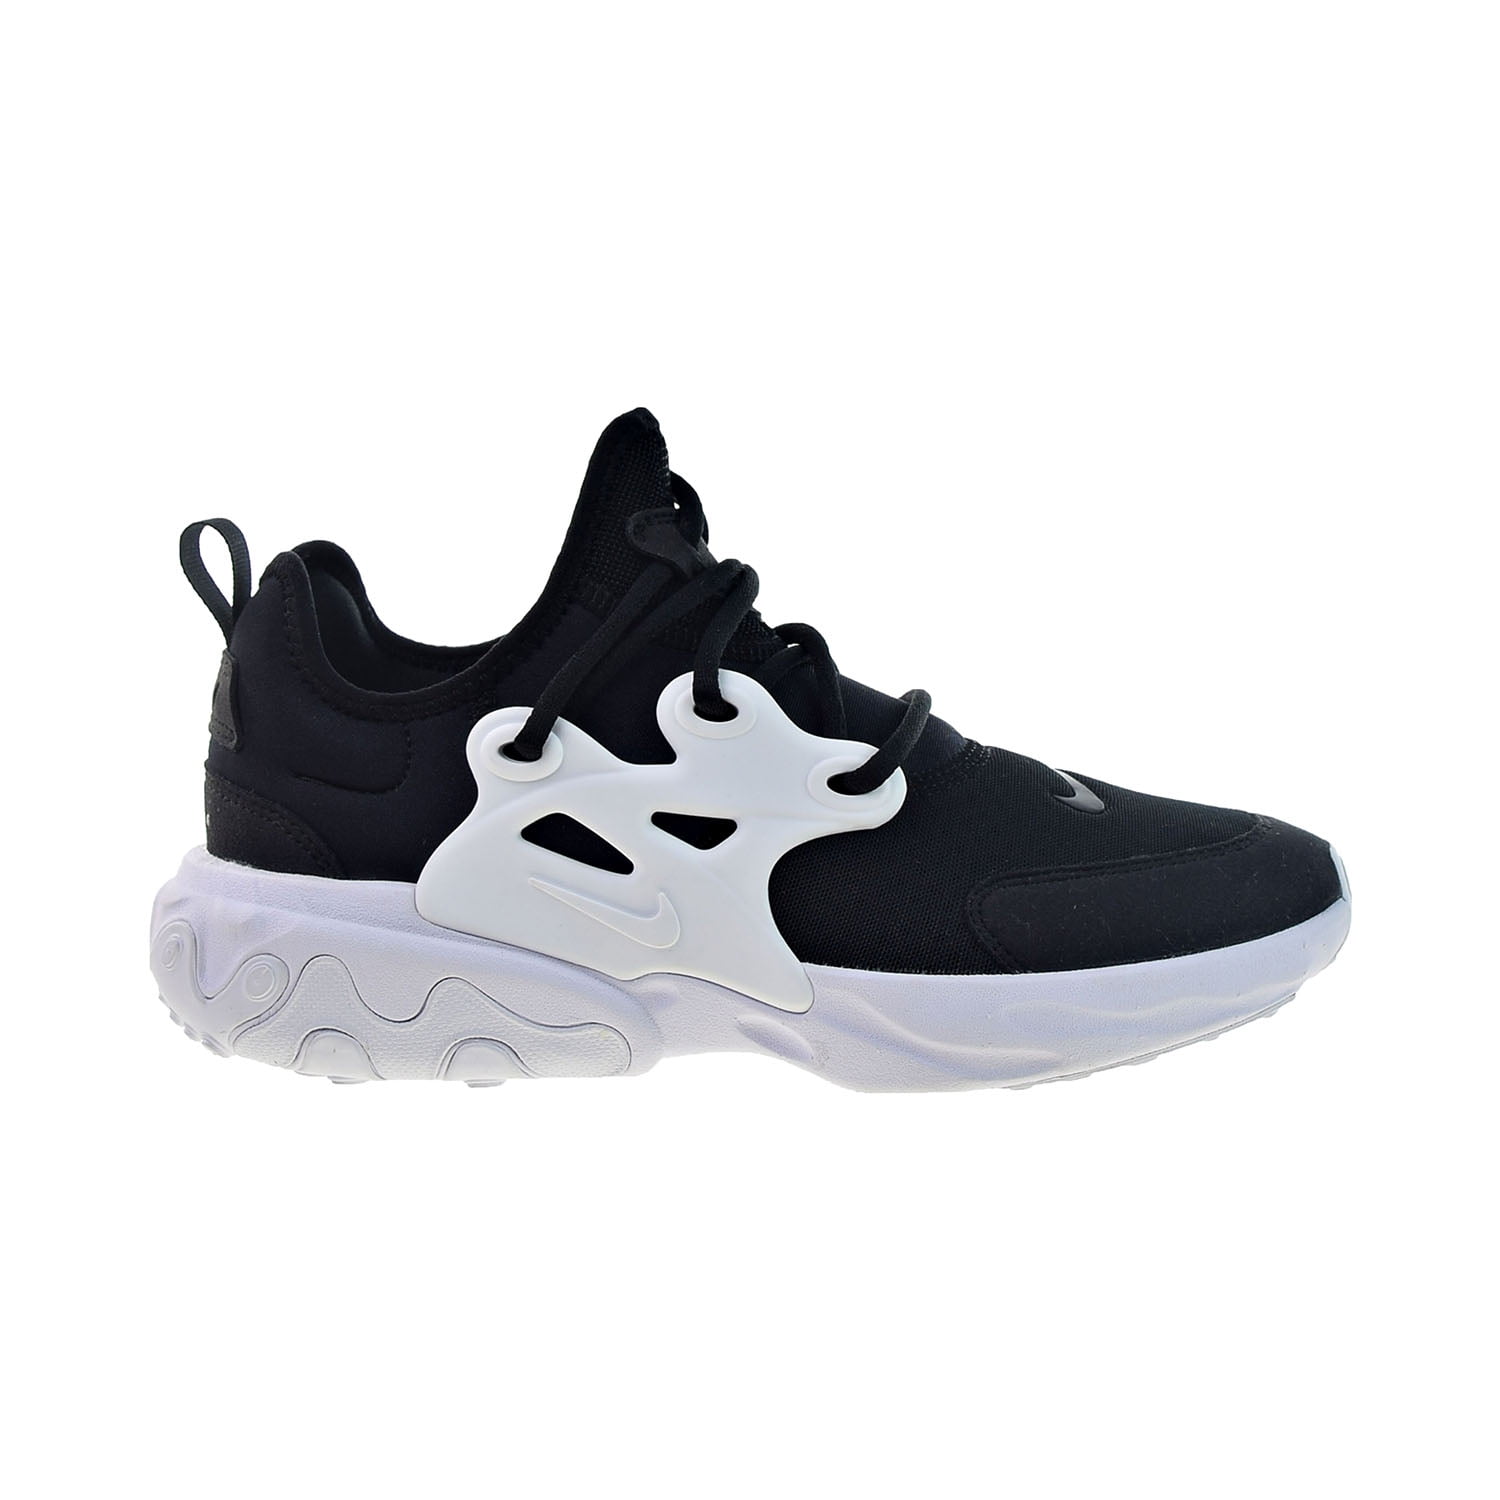 Nike React Presto Big Kids' Shoes Black-White bq4002-001 - Walmart.com